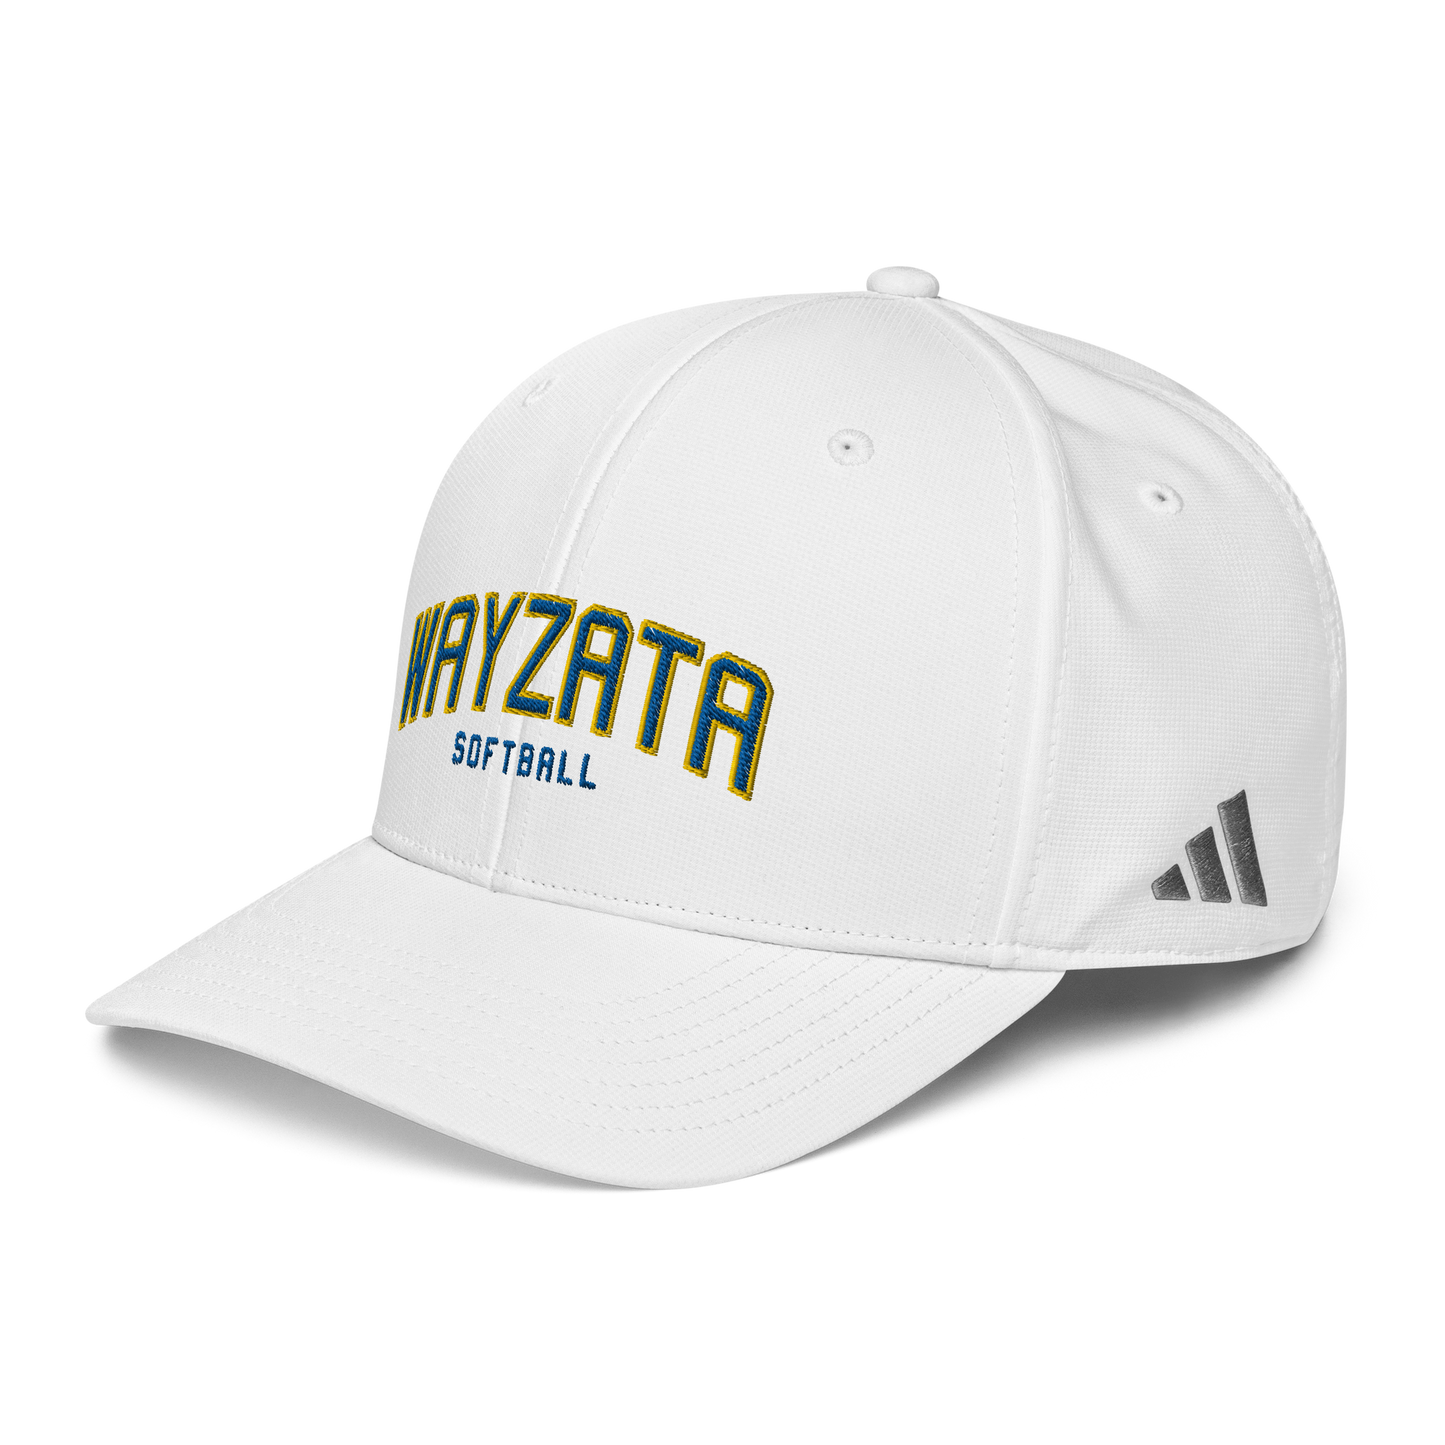 Wayzata Softball Adidas performance cap